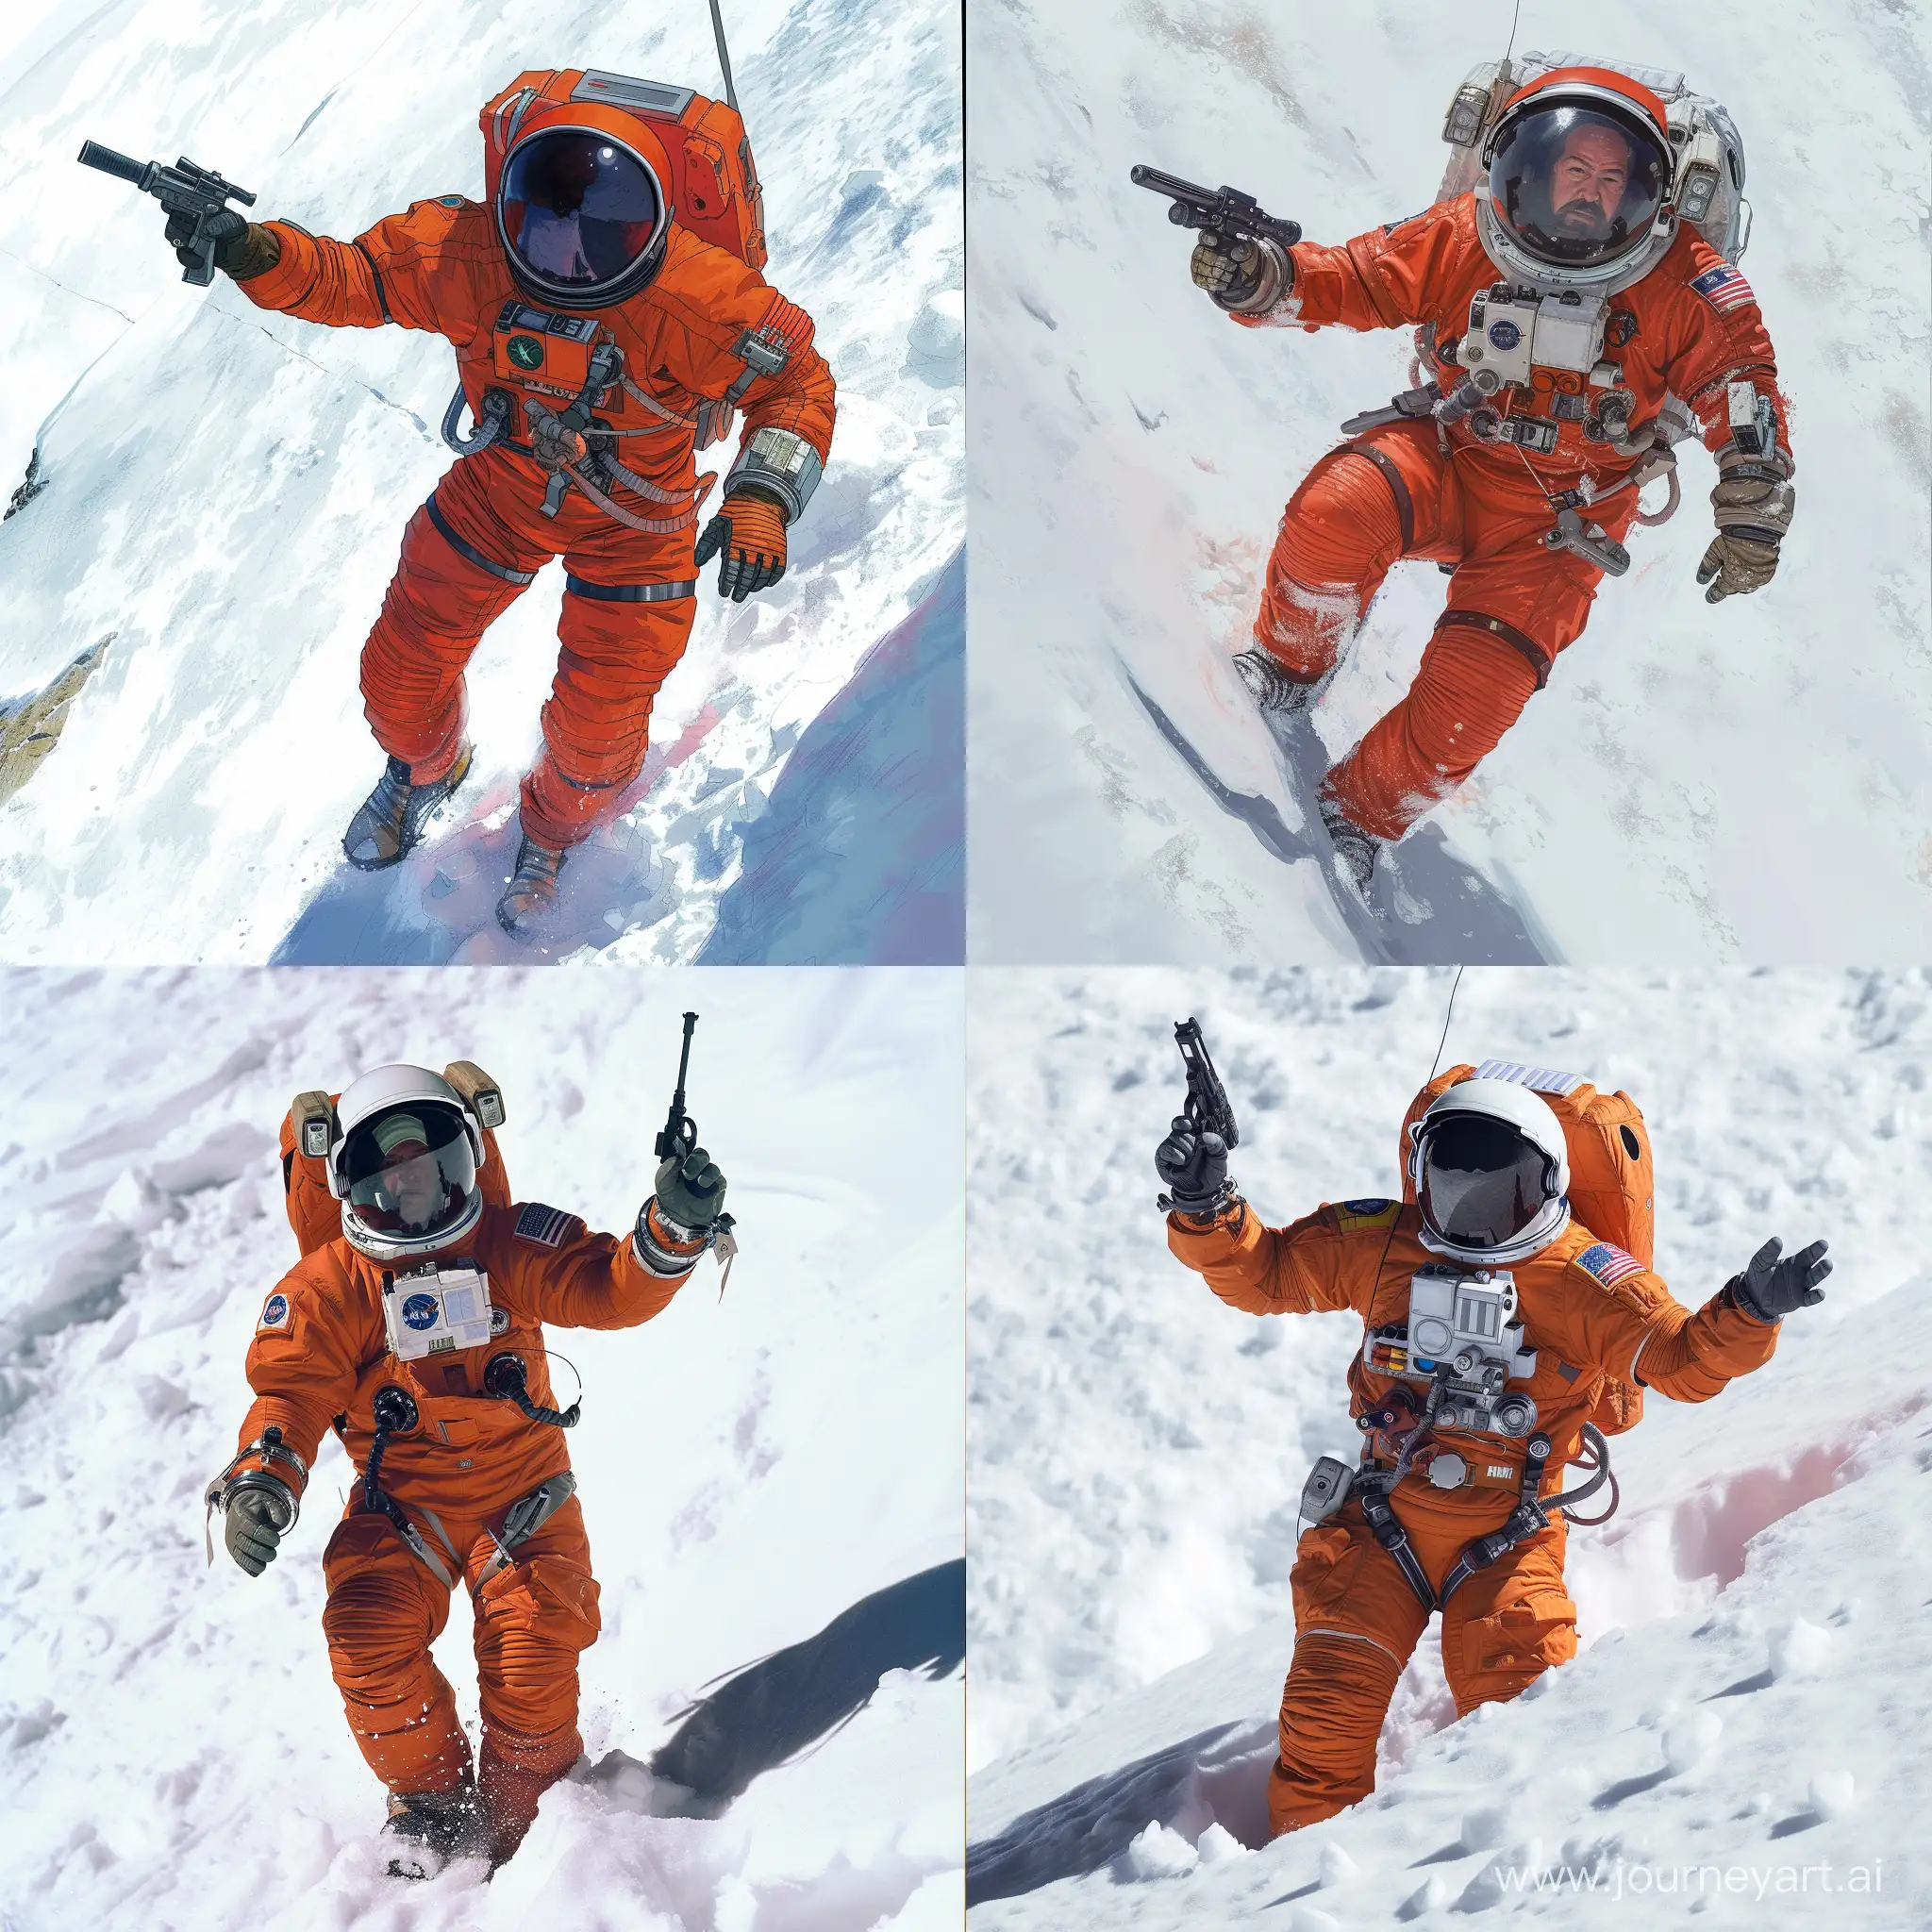 Brave-Astronaut-Confronts-Alien-Threat-on-Icy-Terrain